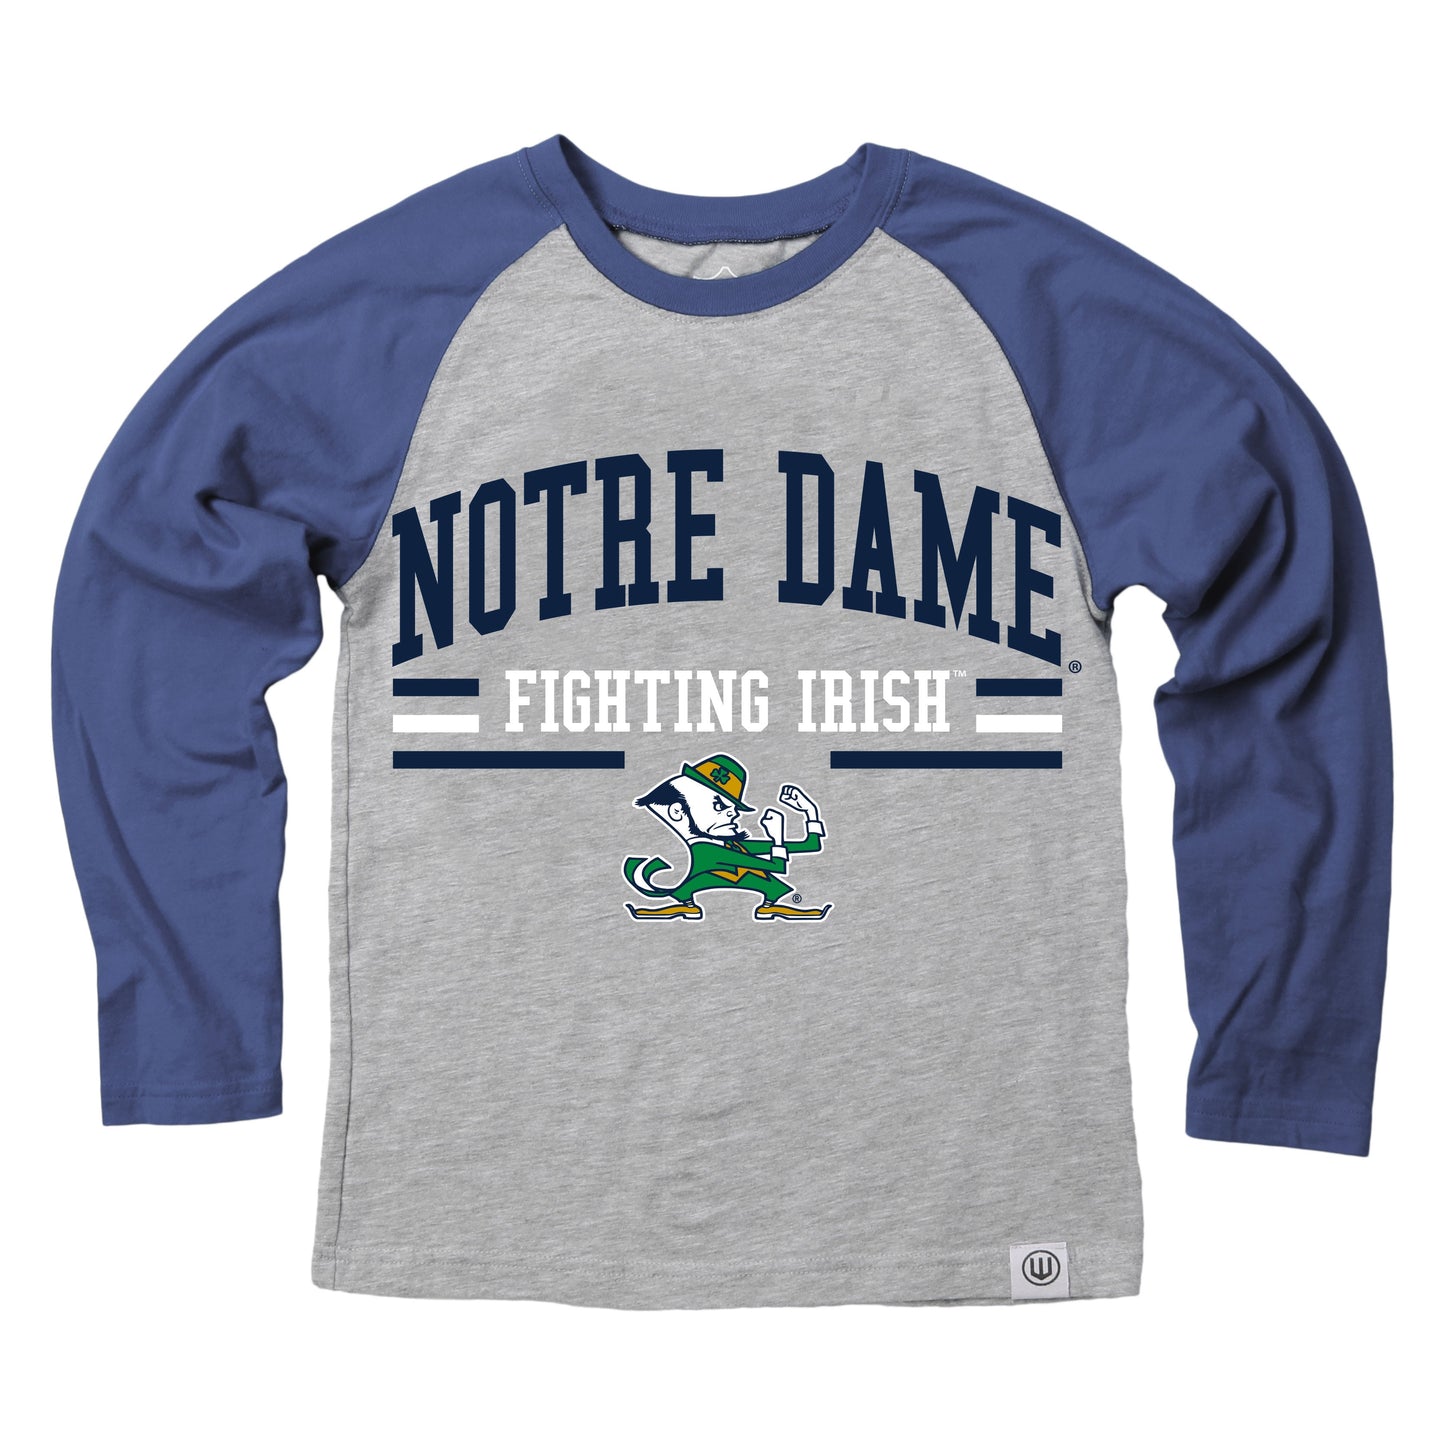 Youth Notre Dame Fighting Irish Long Sleeve Raglan Top